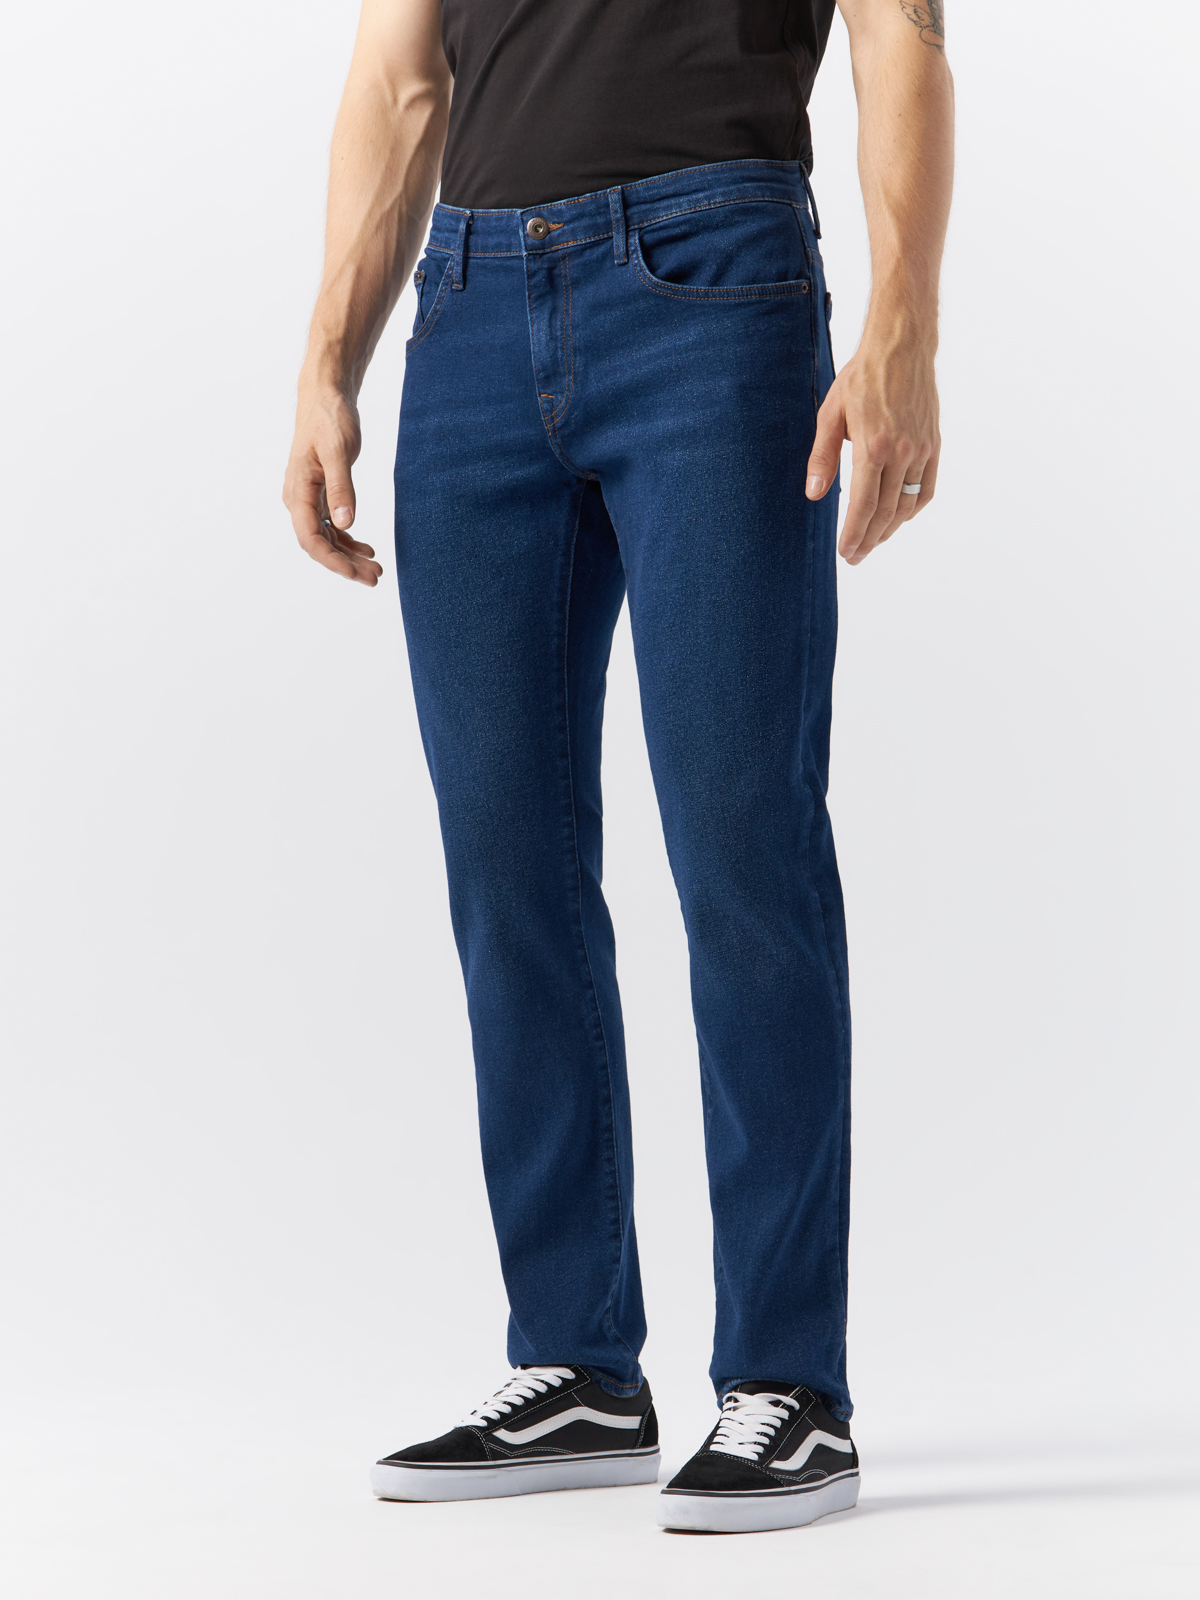 Джинсы Cross Jeans для мужчин, F 152-133, размер 30-32, синие